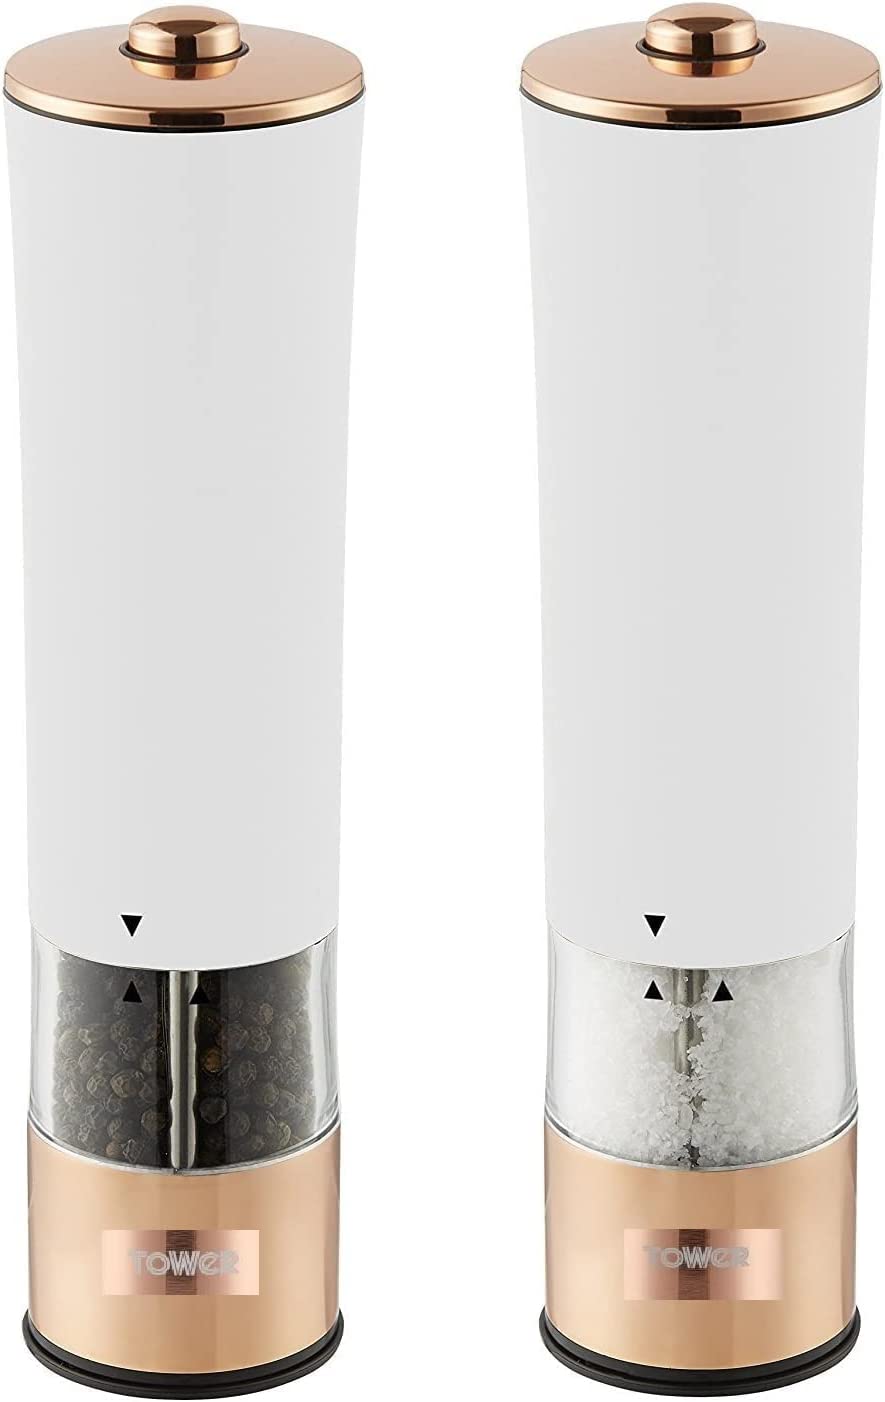 electric salt and pepper grinder amazon kitchen gadget